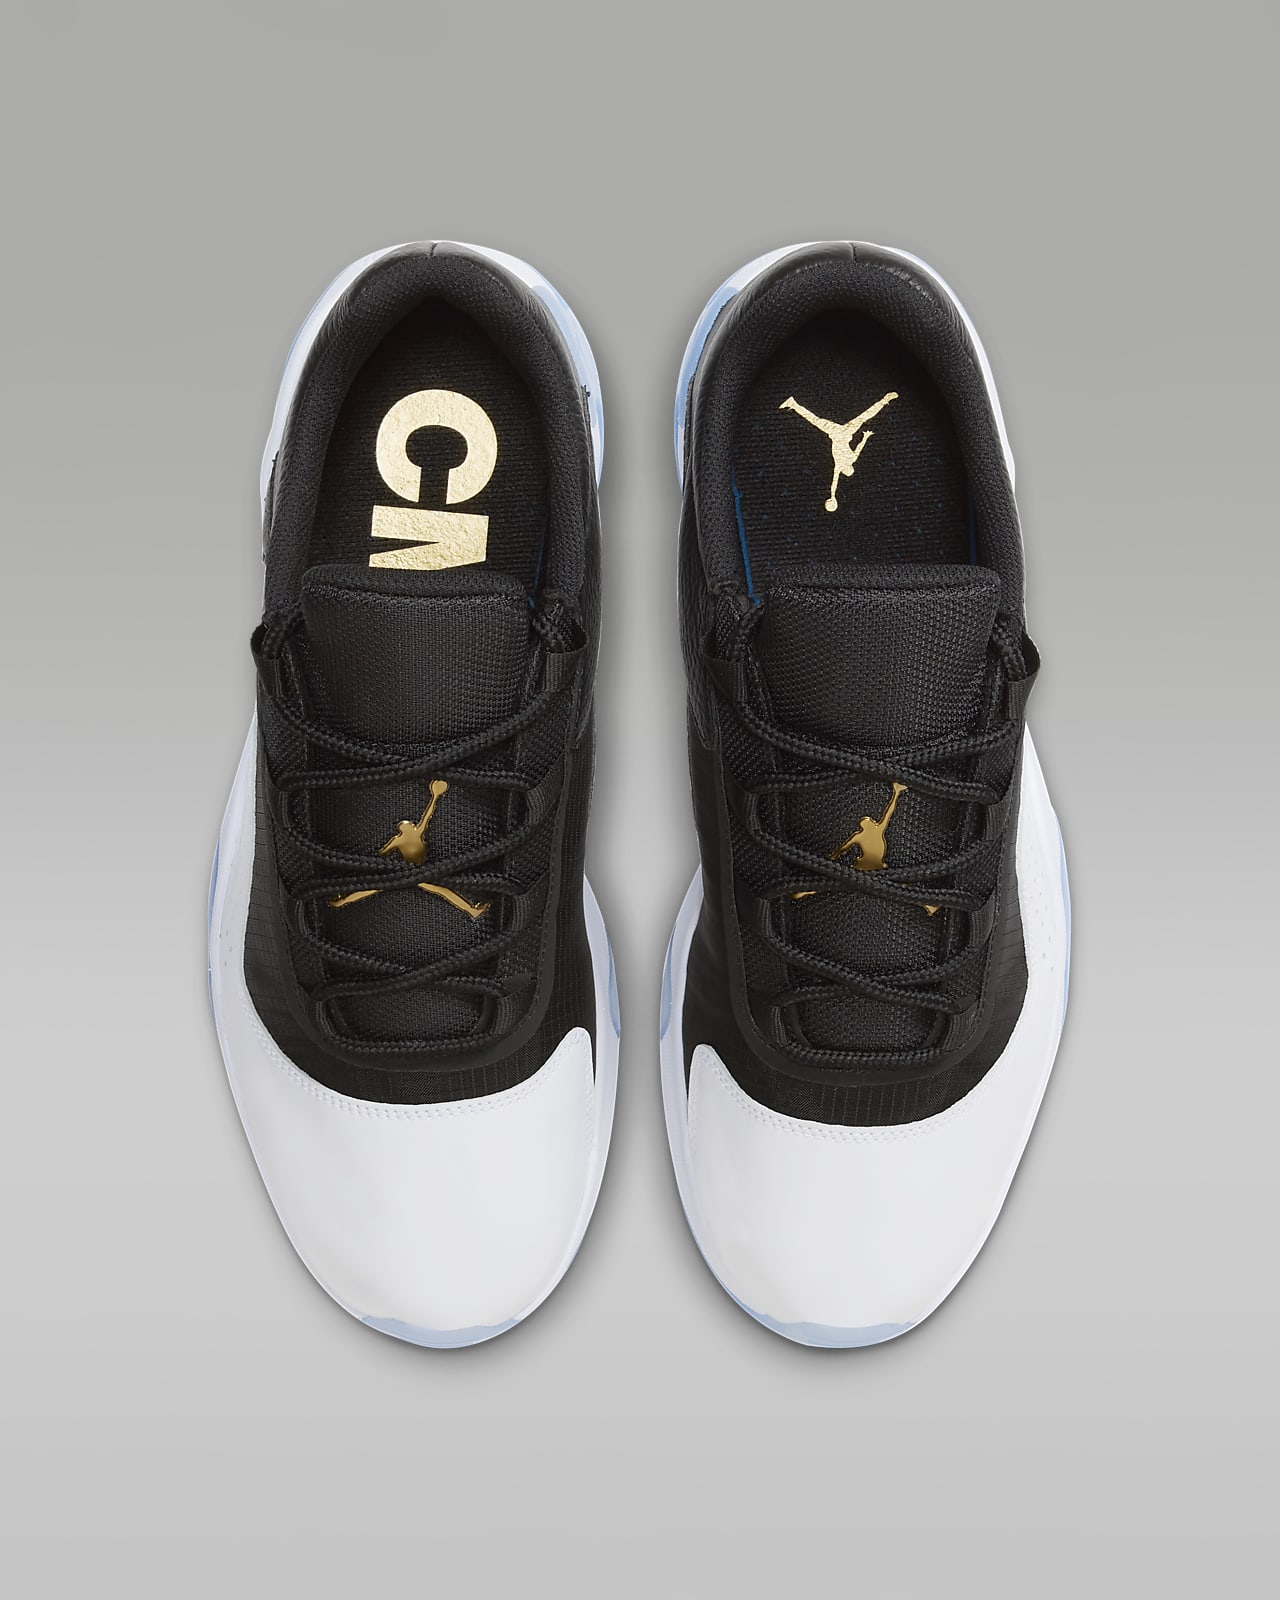 Nike Air Jordan 11 Retro Space Jam | Size 14, Sneaker in Black/White/Blue